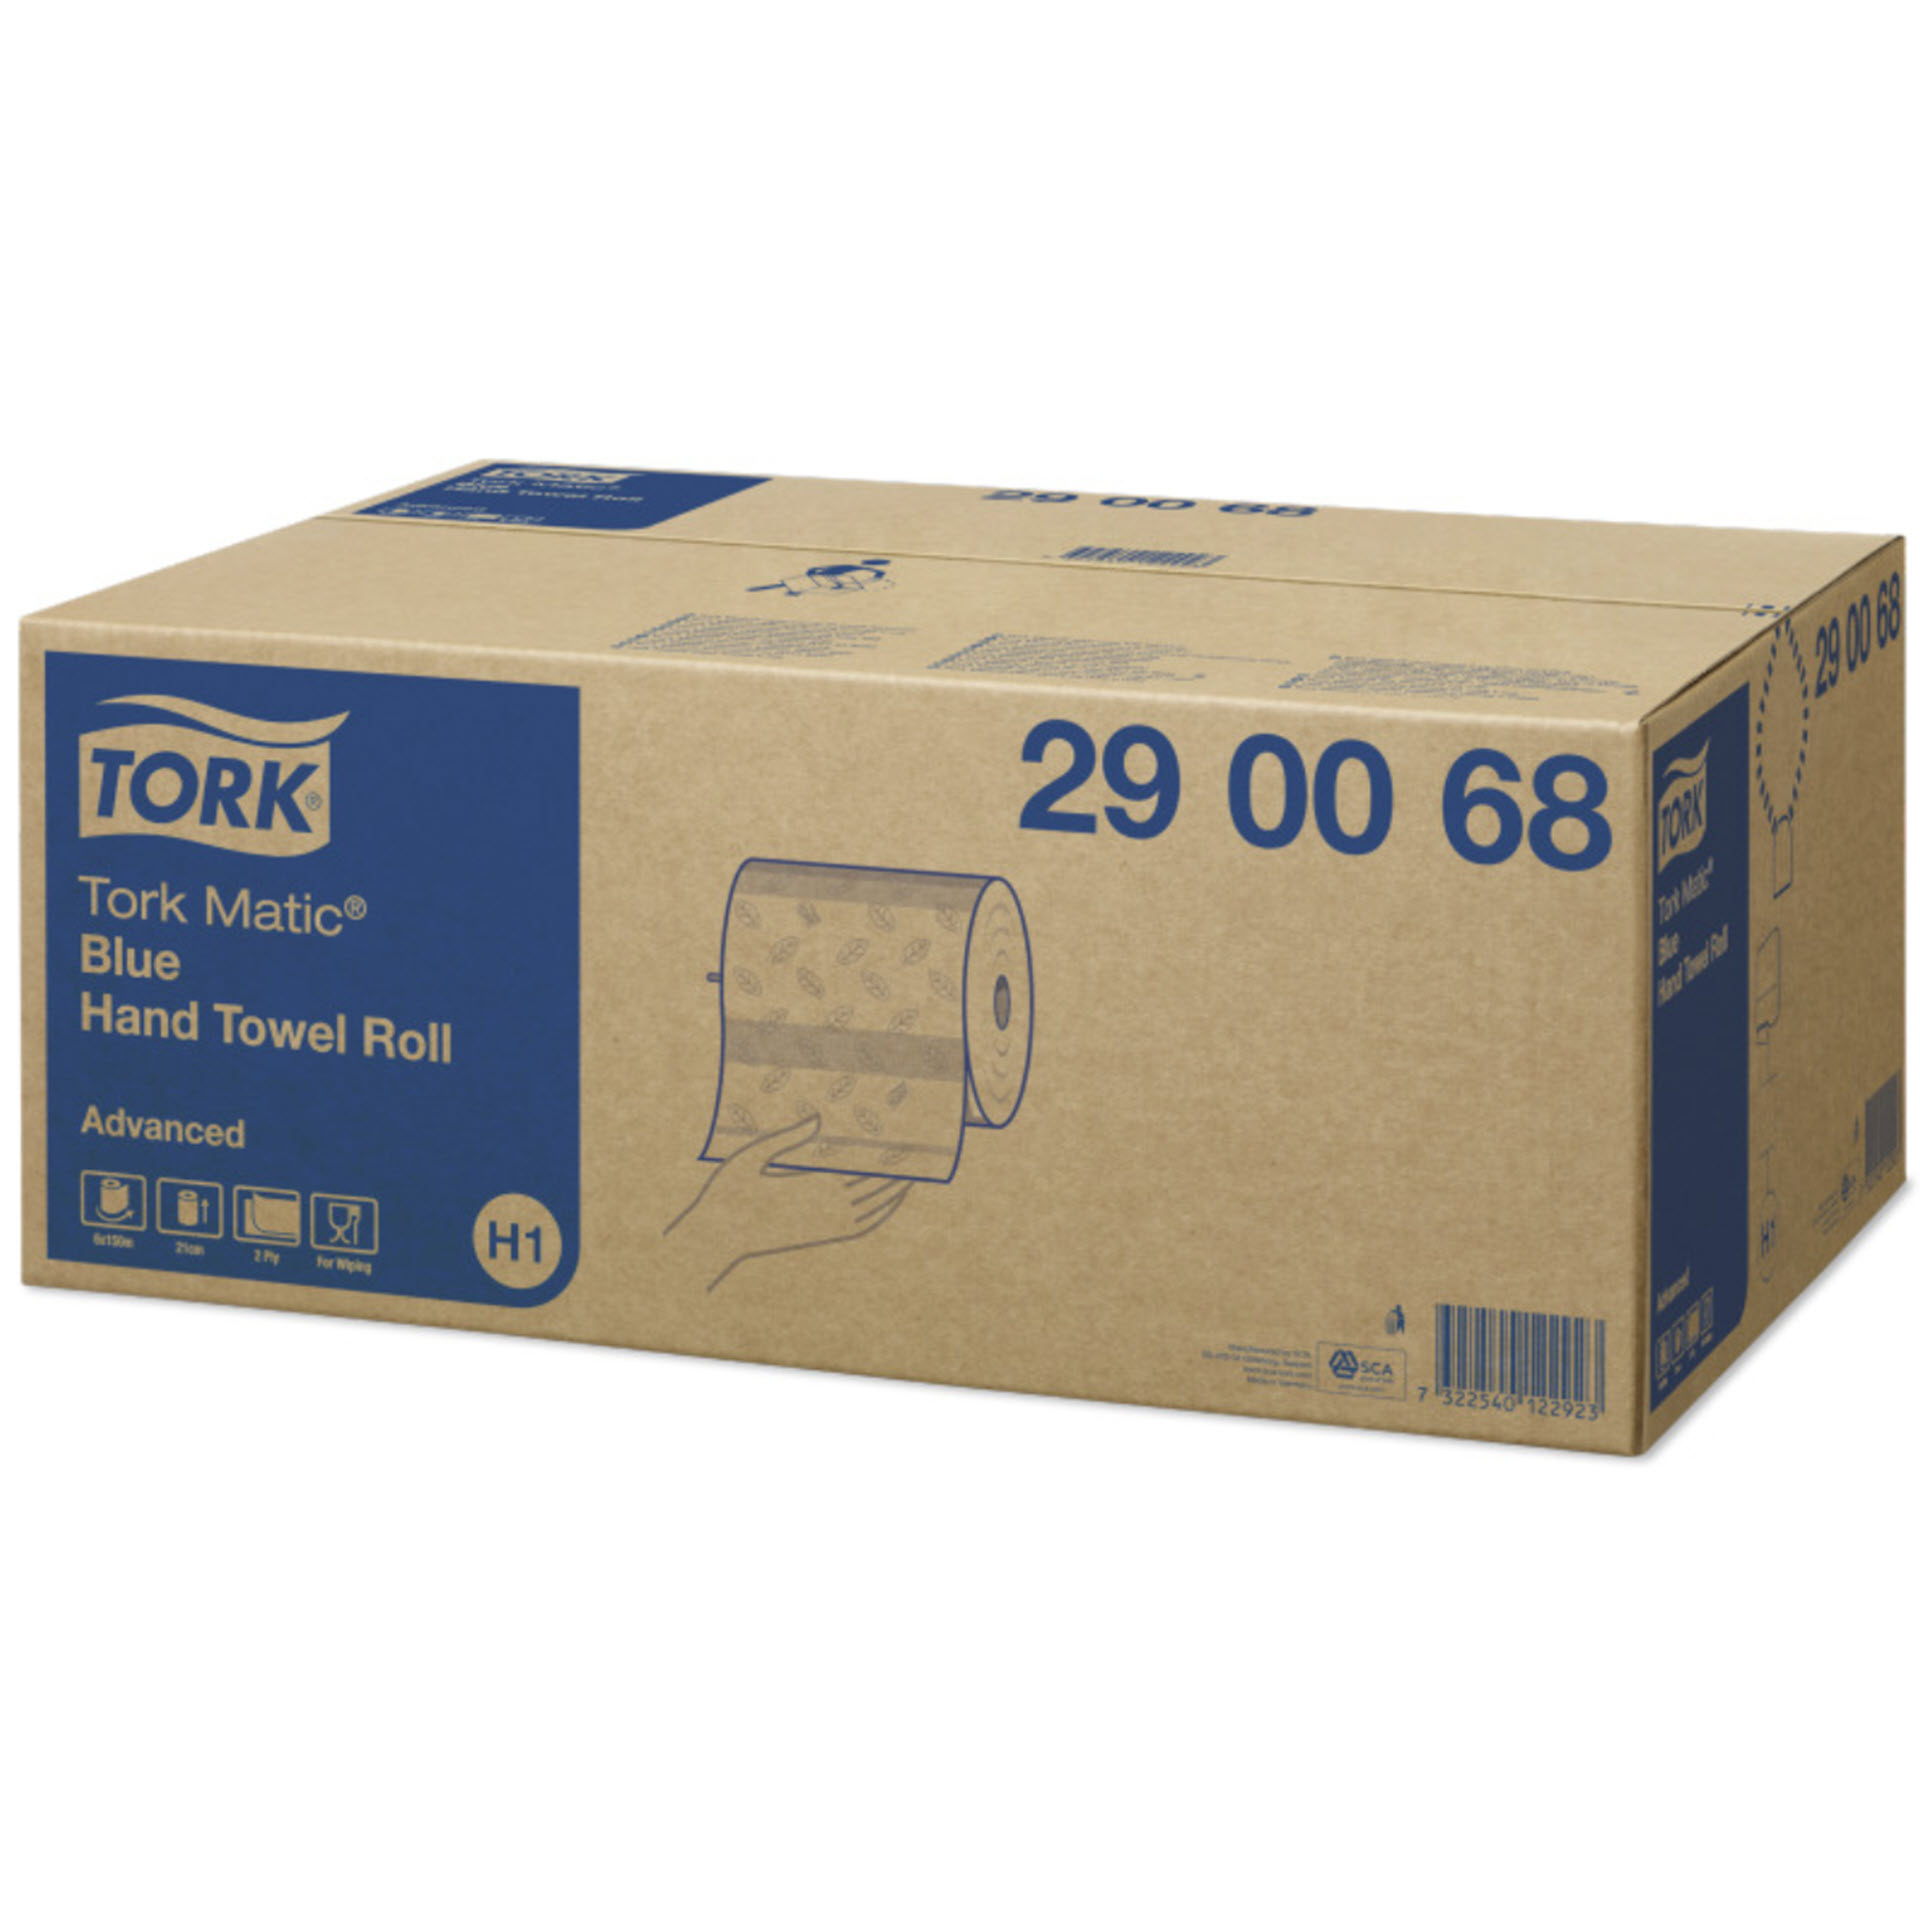 Tork Matic® blaues Rollenhandtuch Advanced 2-lagig TAD & Tissue - 290068 H1